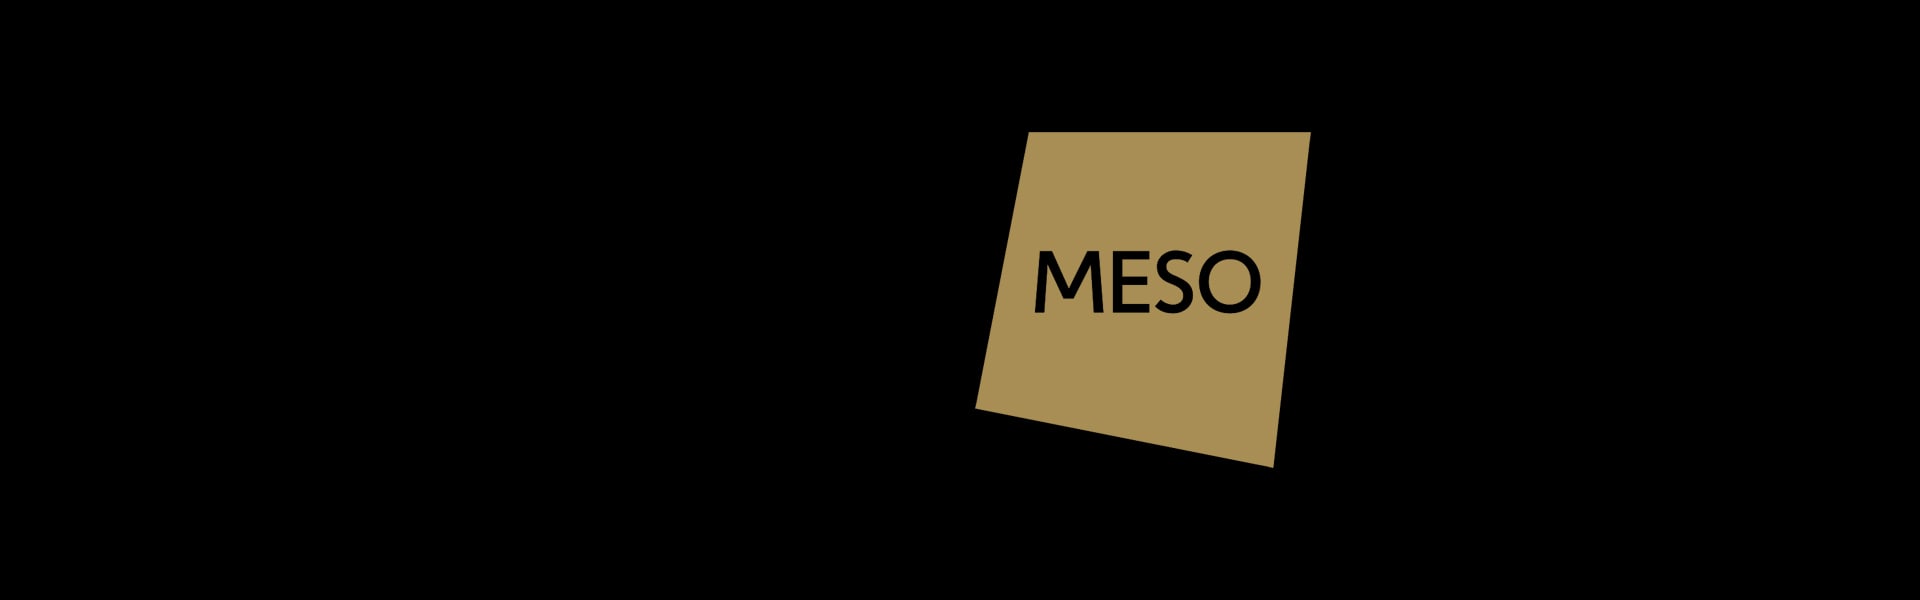 Meso Logo